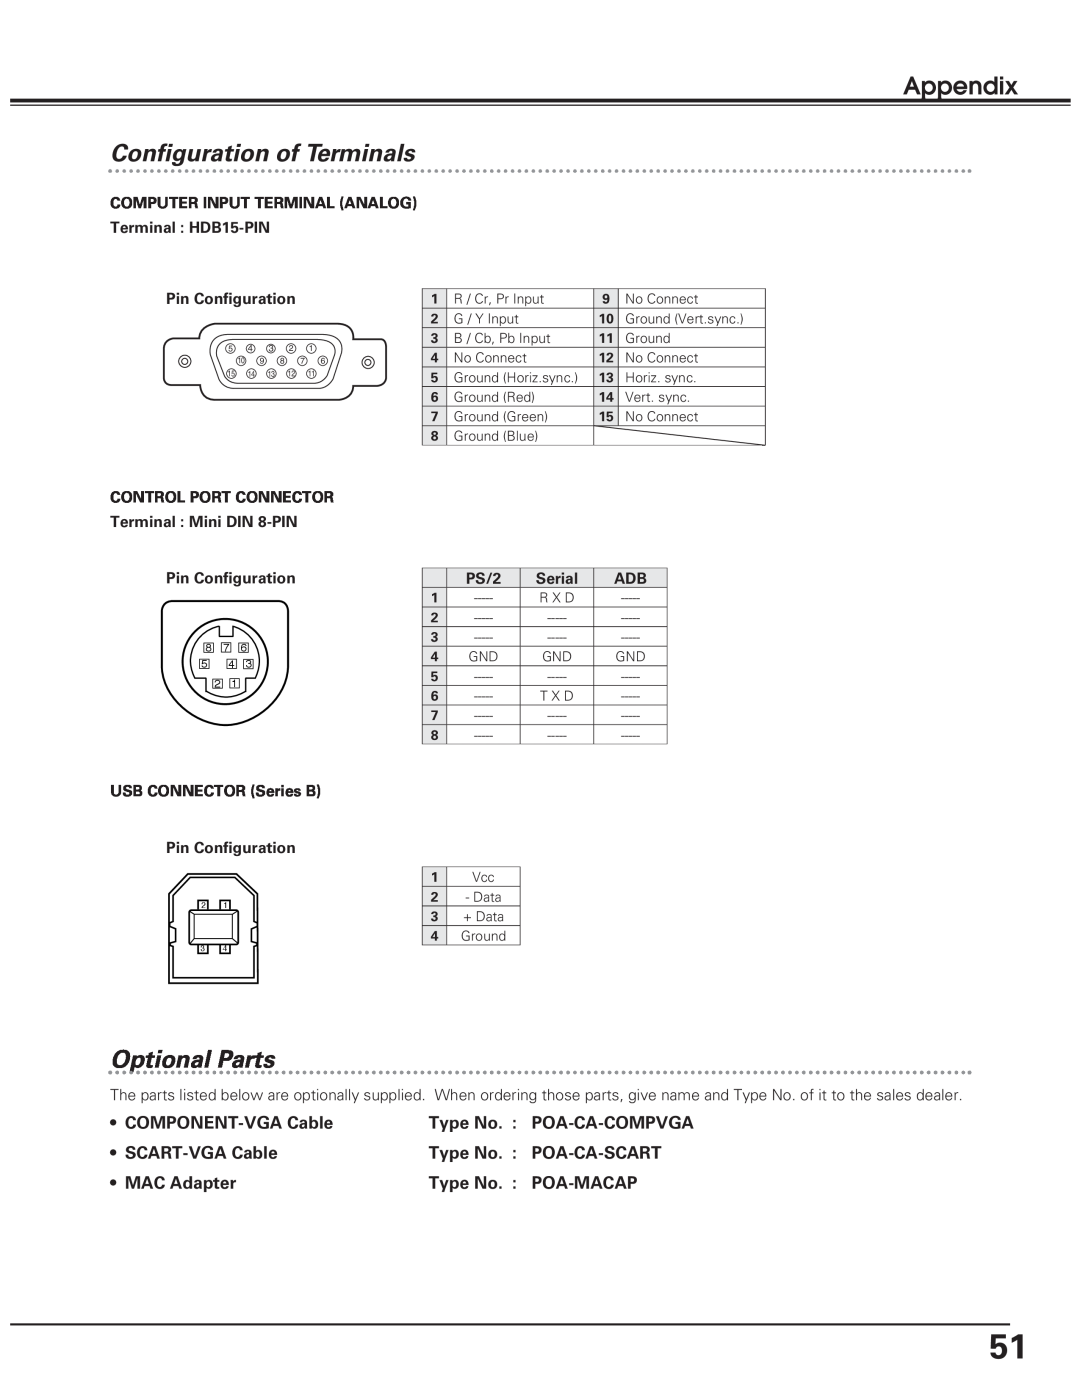 Eiki LC-SD10 Configuration of Terminals, Optional Parts, • COMPONENT-VGACable, Type No, Poa-Ca-Compvga, • SCART-VGACable 